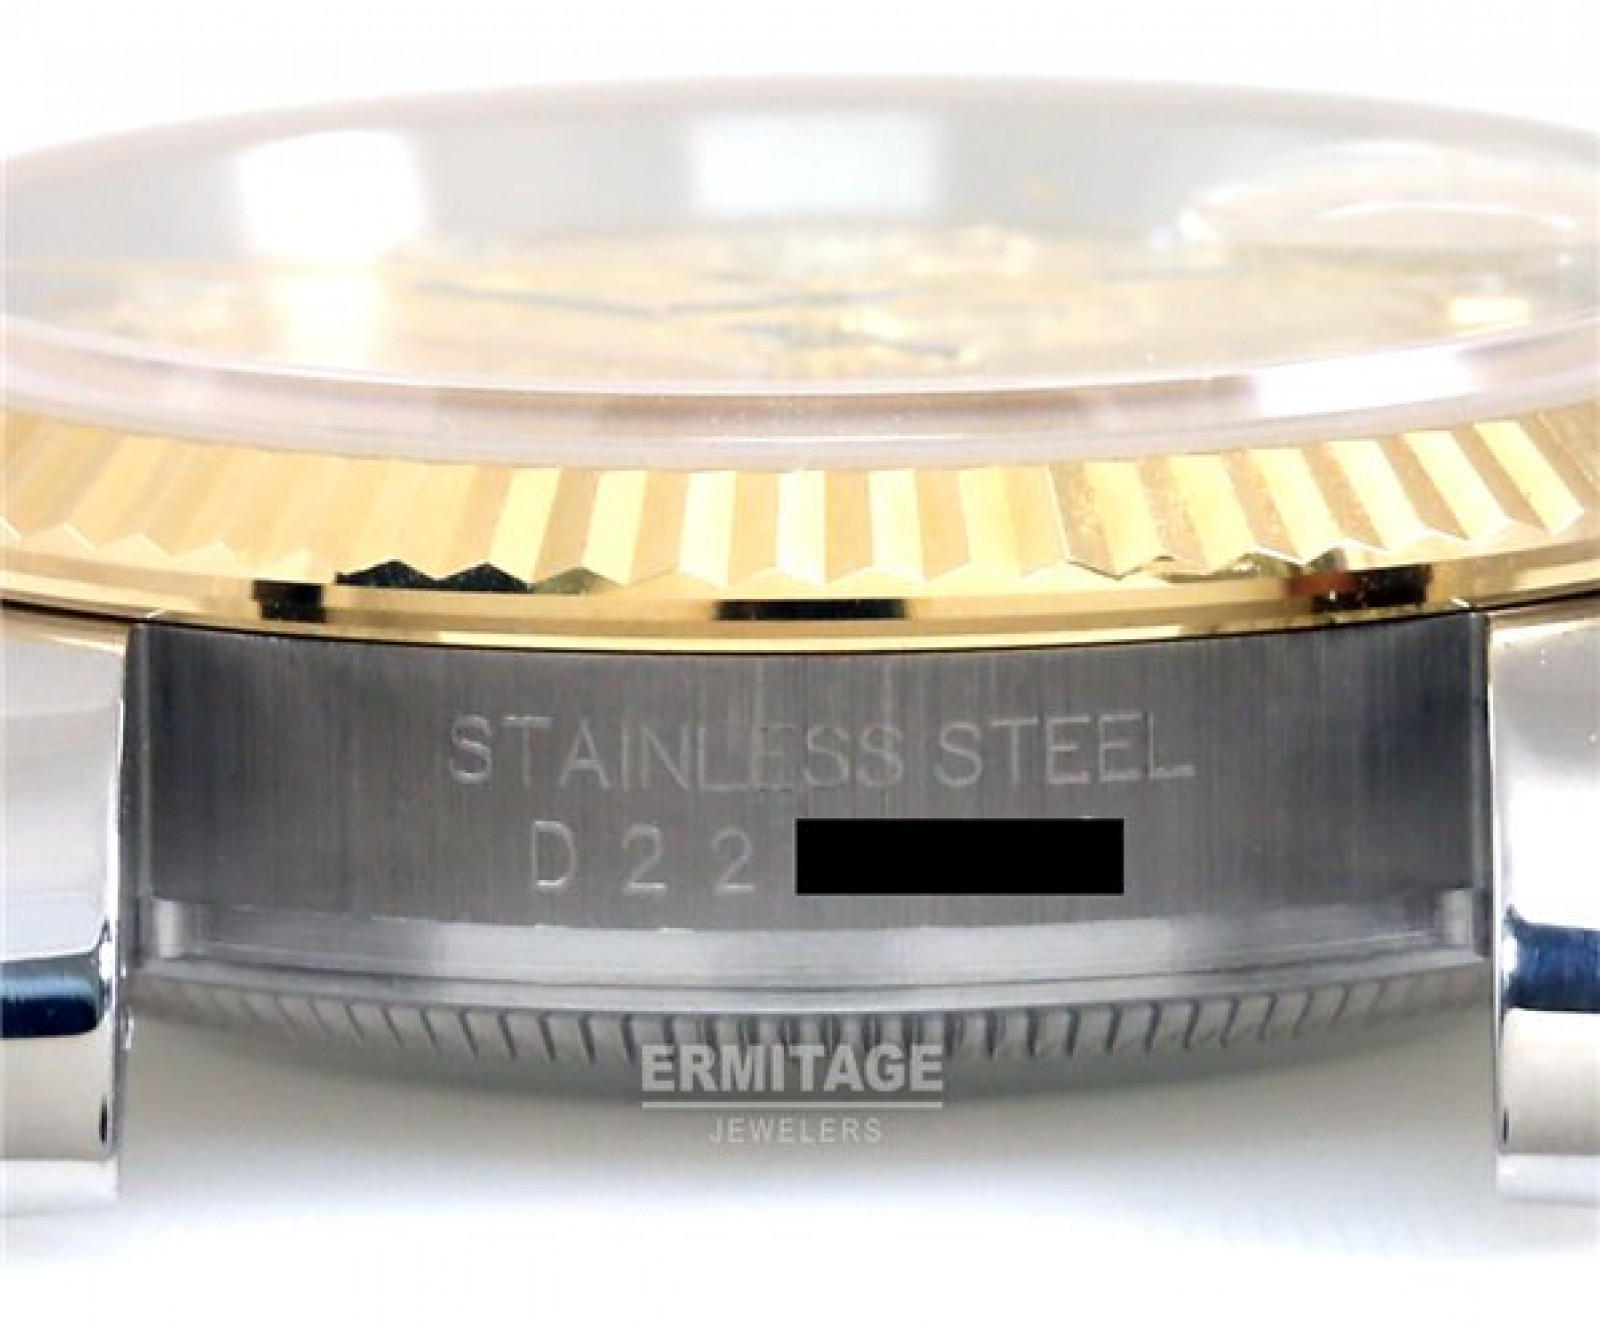 Rolex Datejust 116233 Gold & Steel with Diamonds